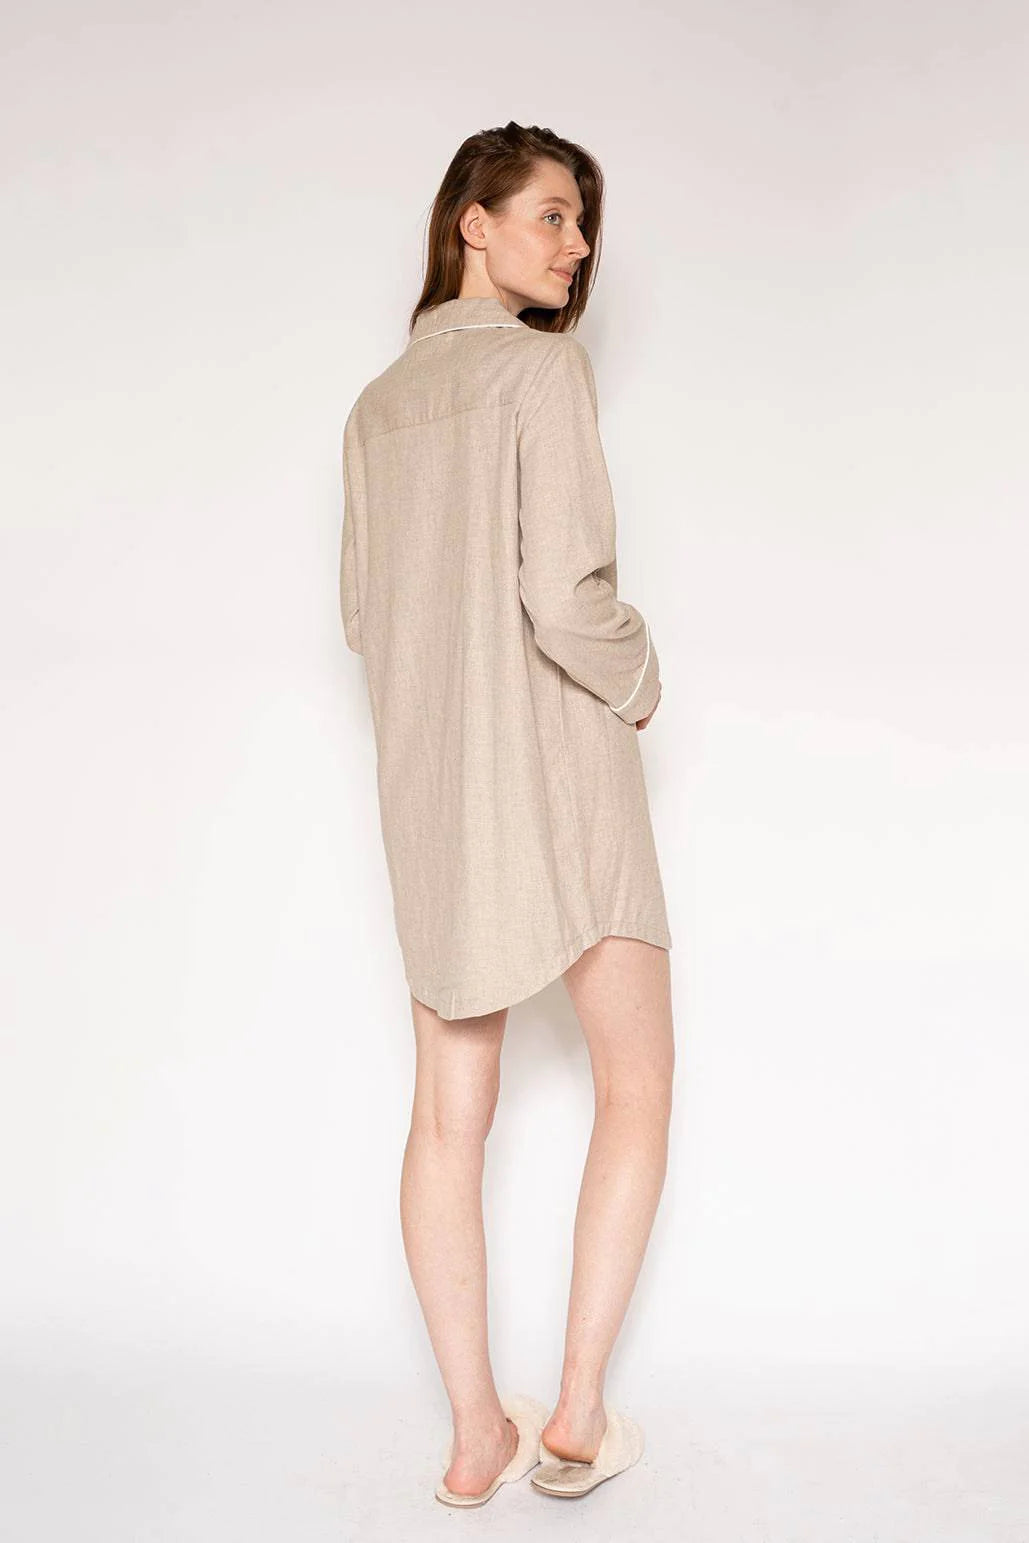 LatteLove Co. Heather Oat Long Sleeve Flannel Night Shirt